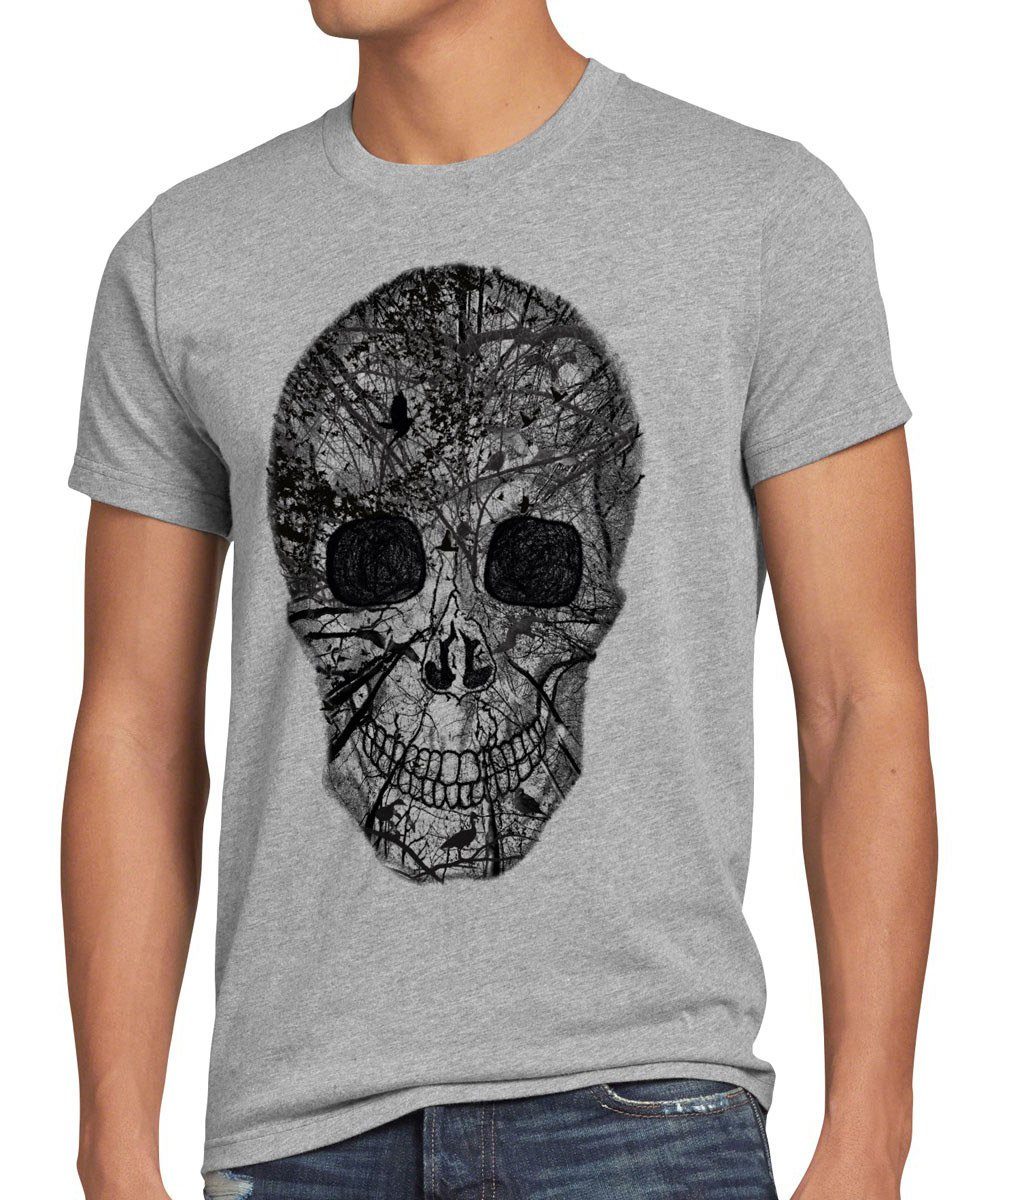 style3 Print-Shirt Herren T-Shirt Skull Totenkopf rocker club biker heavy horror kopchen Skelett us grau meliert